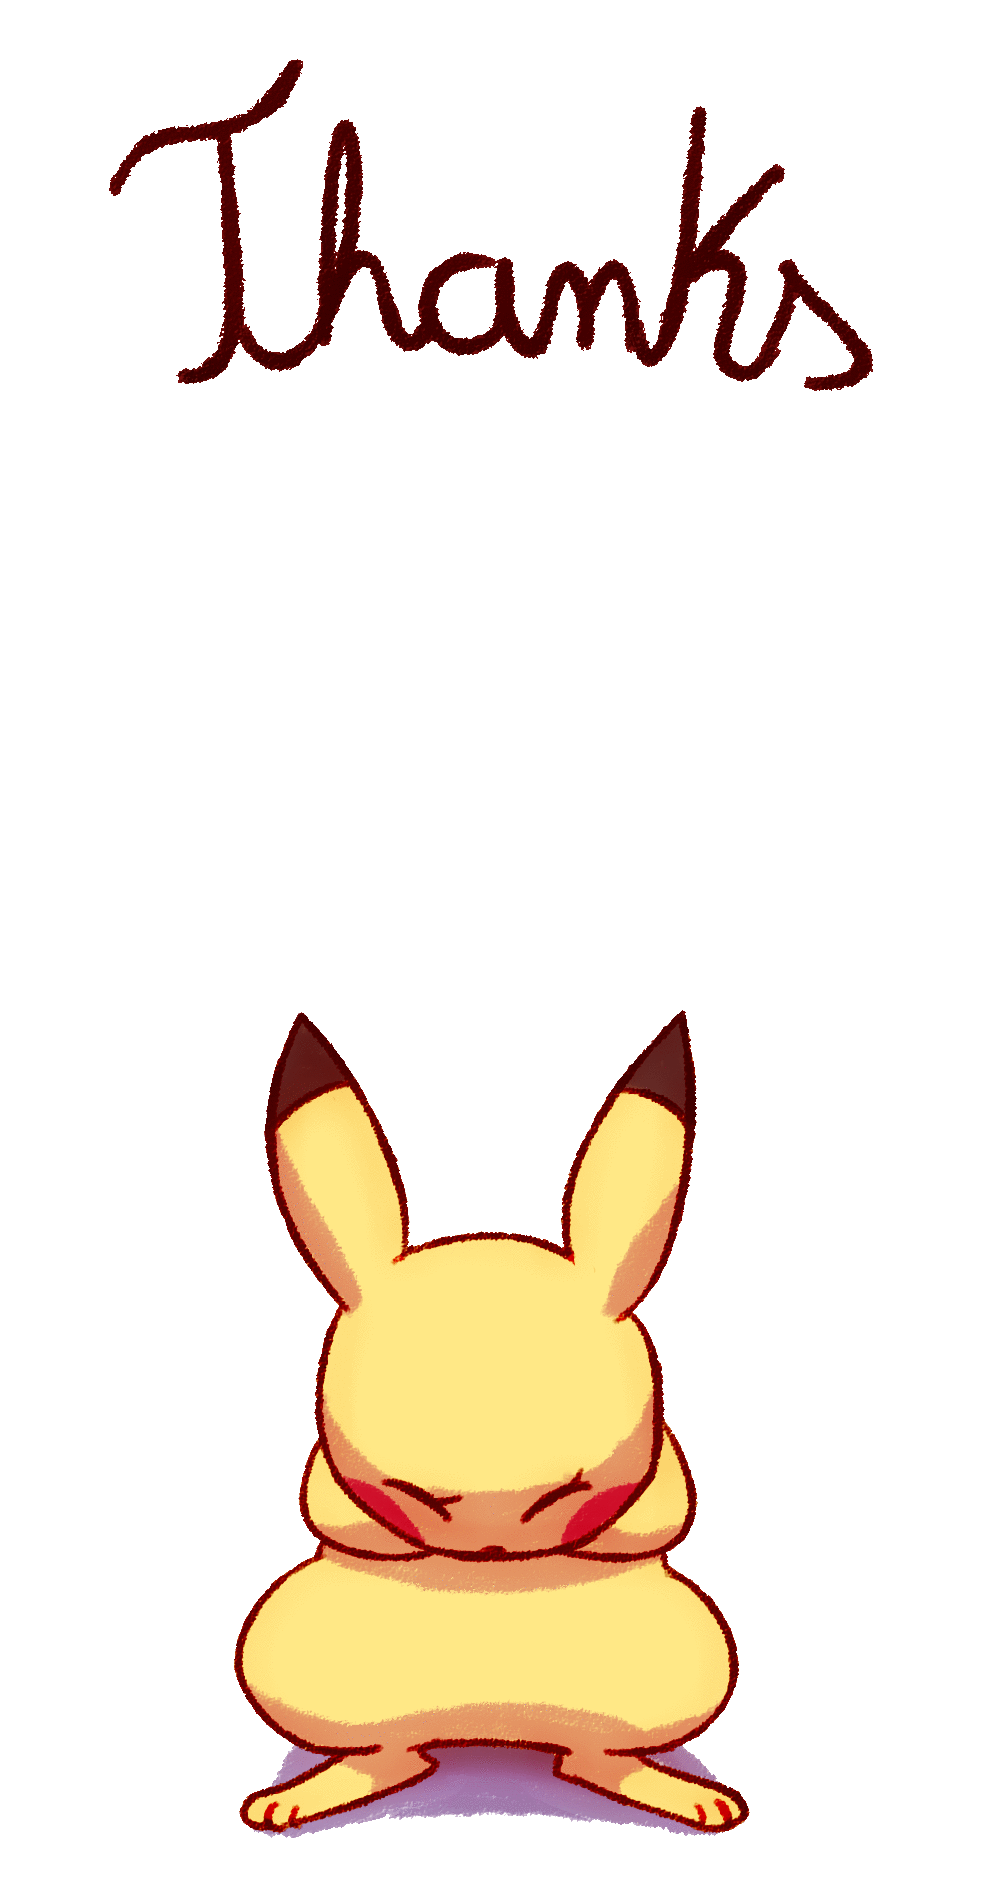 Pokemon Pikachu Thanks GIF | GIFDB.com